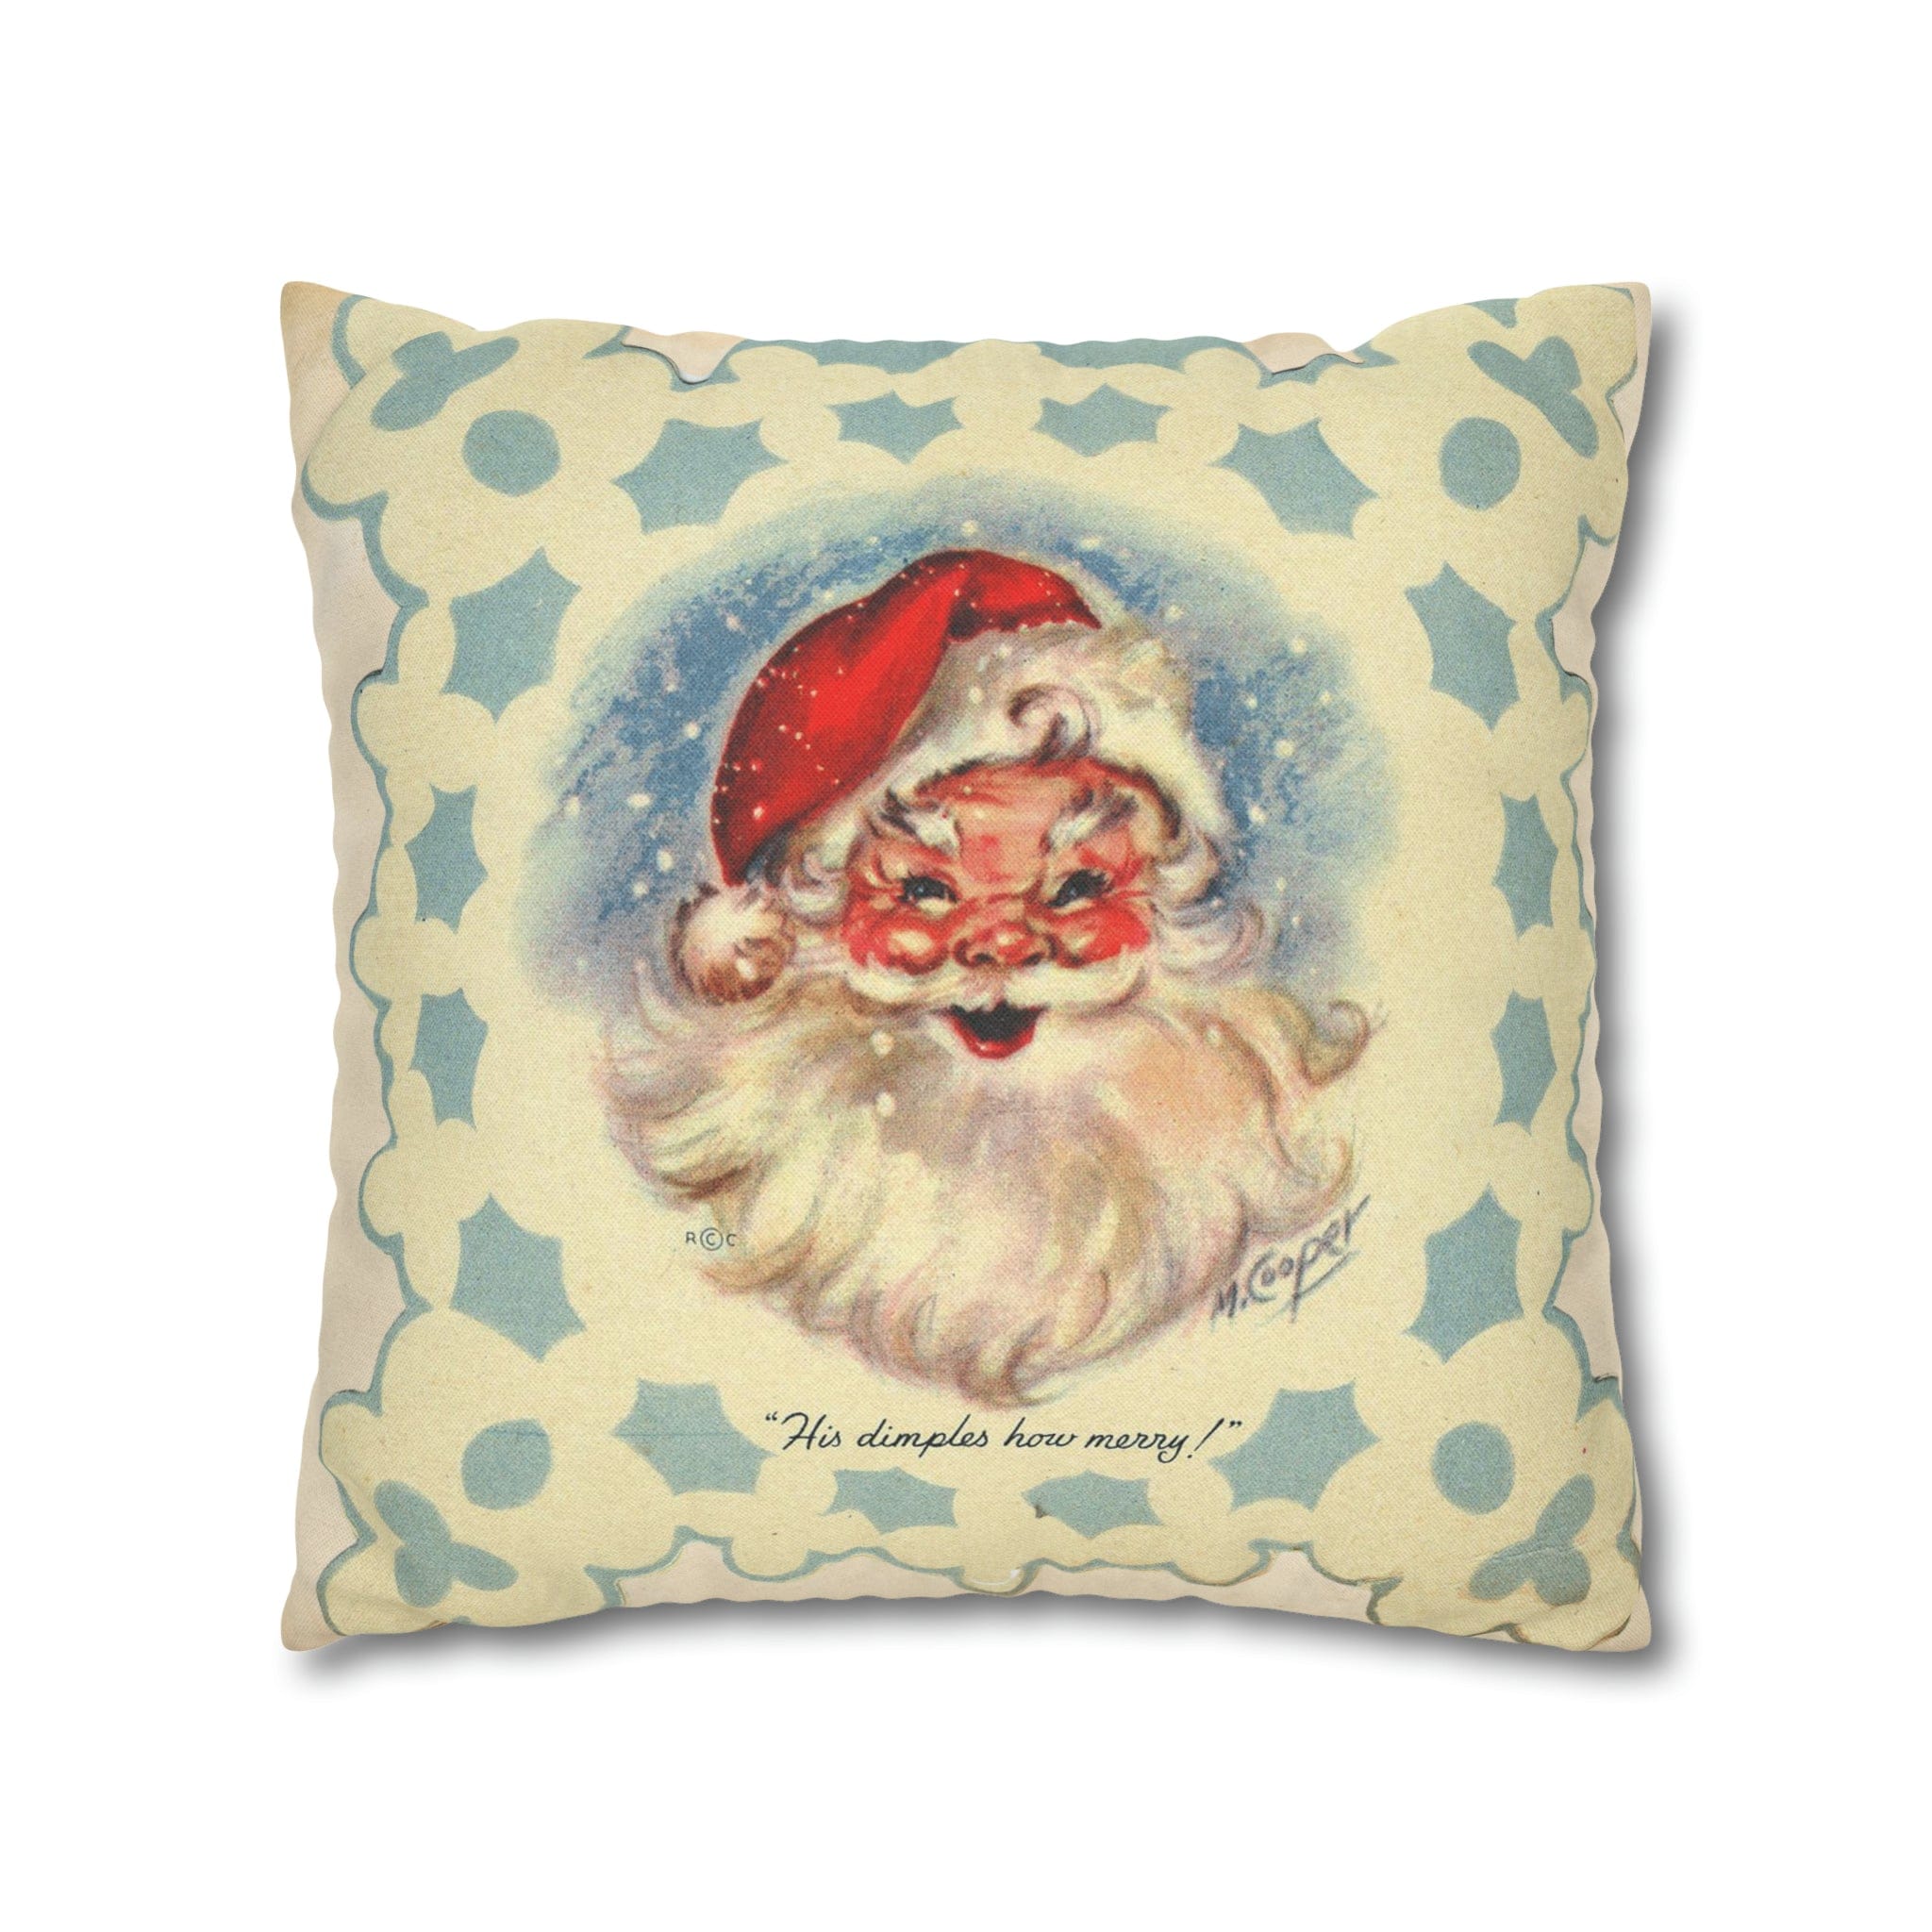 Vintage Santa, Christmas Snowflake, Smiling Santa Pillow Cover Home Decor